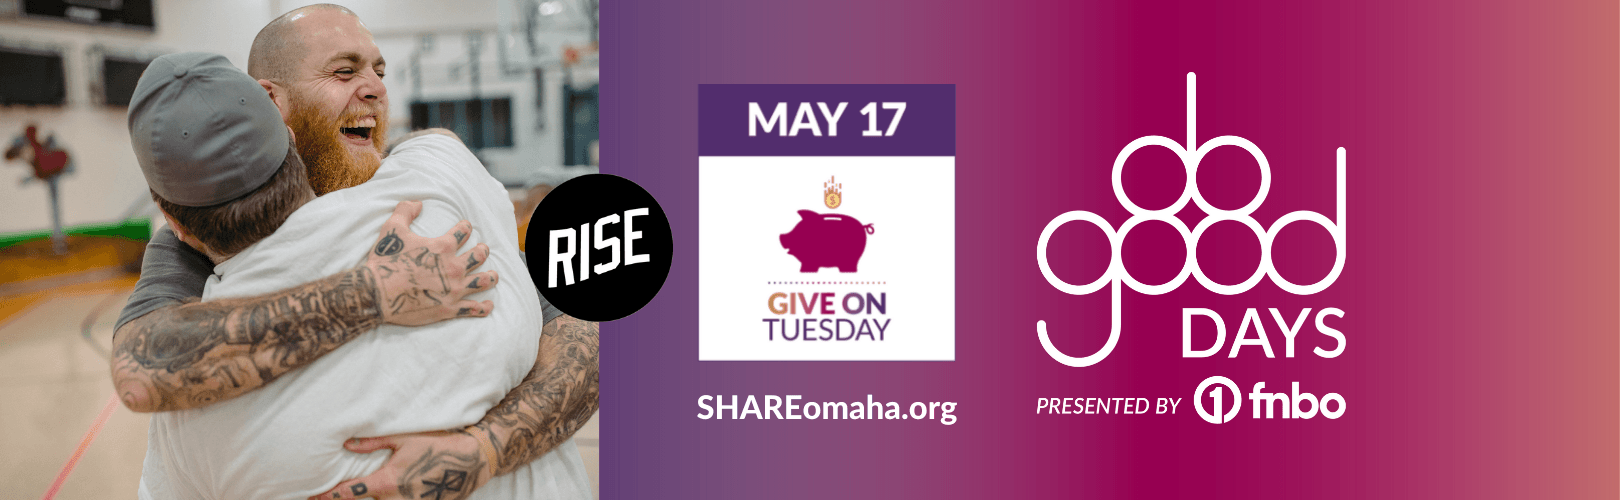 SHARE Omaha Do Good Days: Give on Tuesday